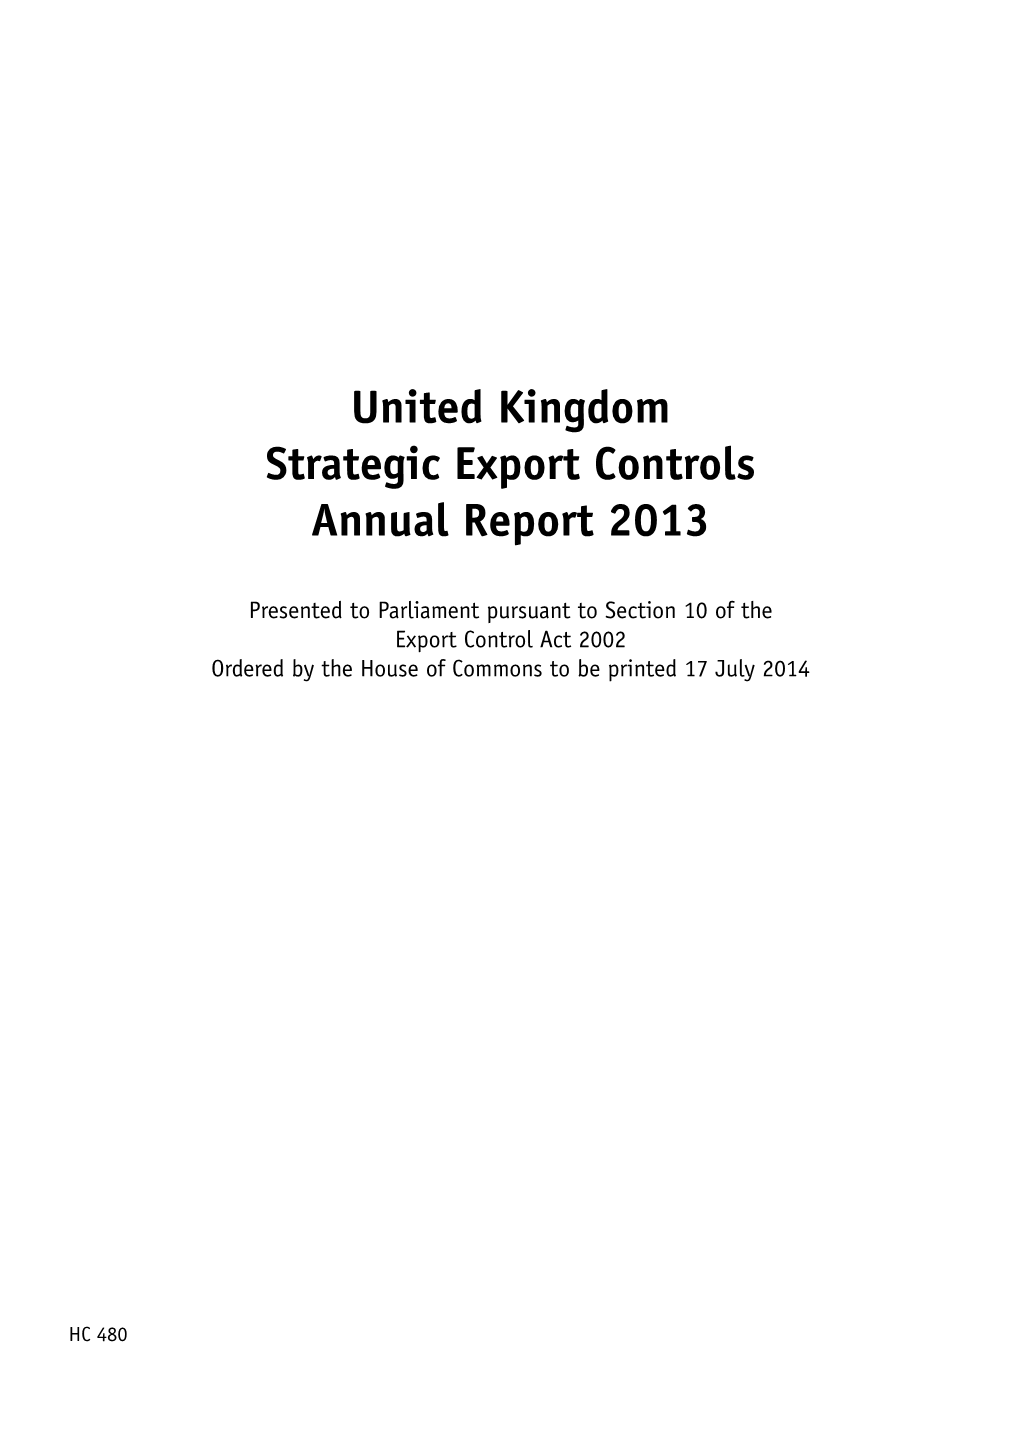 United Kingdom Strategic Export Controls Annual Report 2013